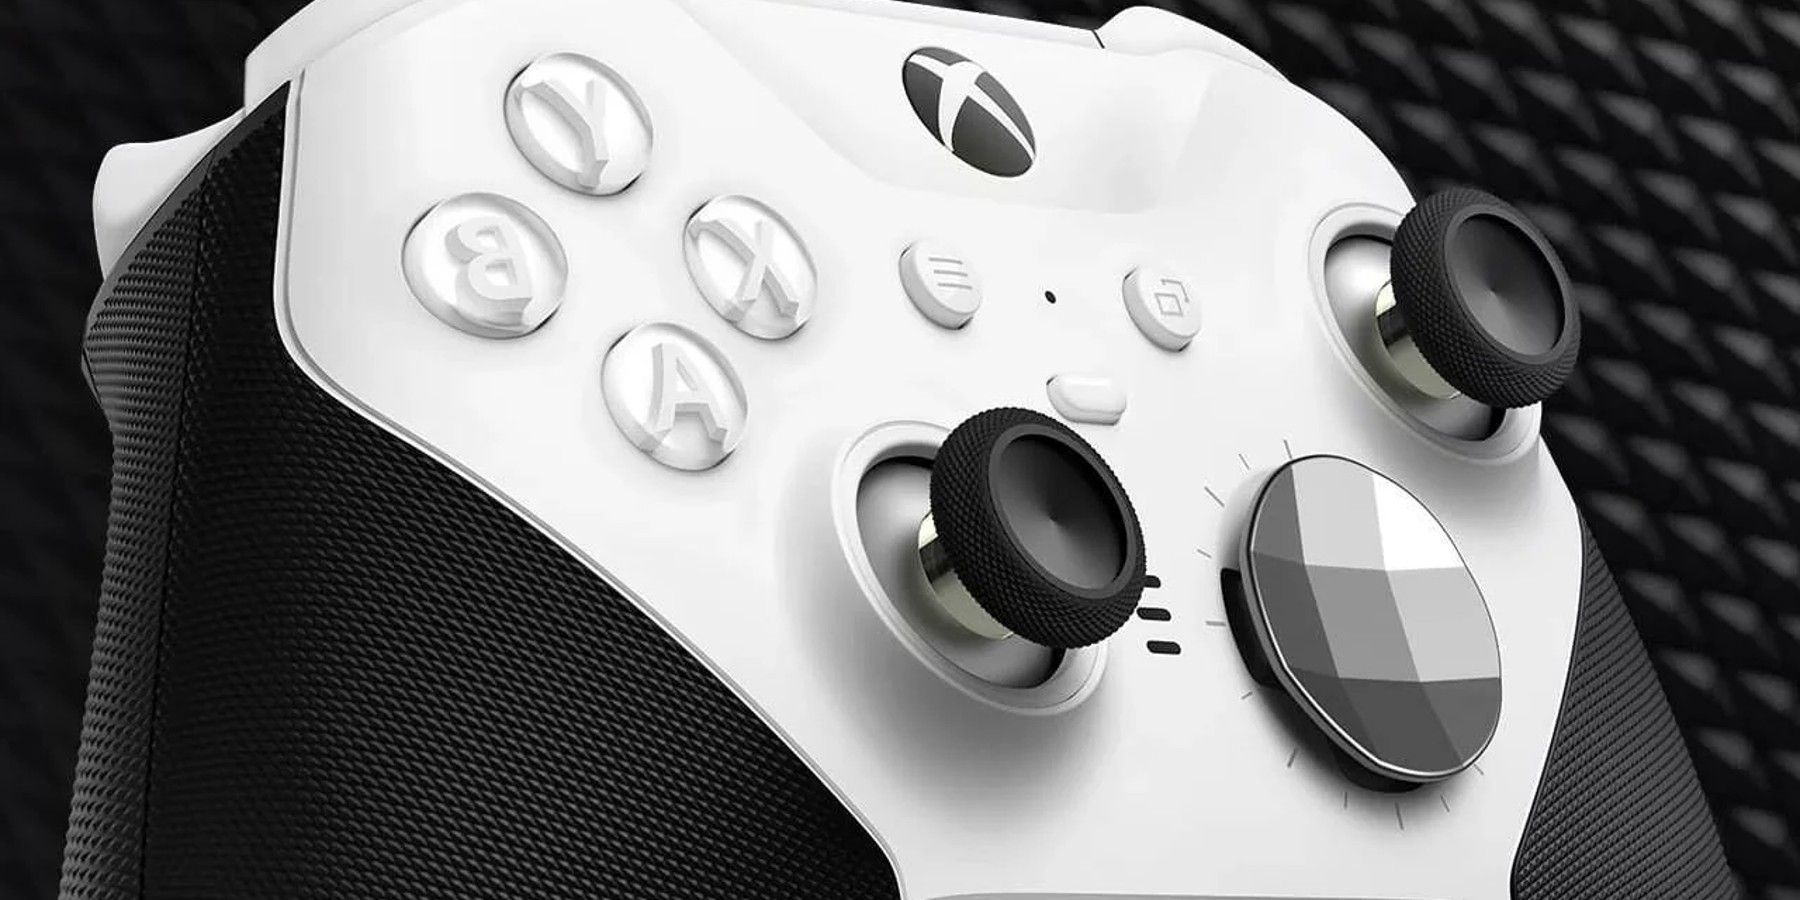 Controllers 2 Reveals 2 Xbox Elite Core New Series